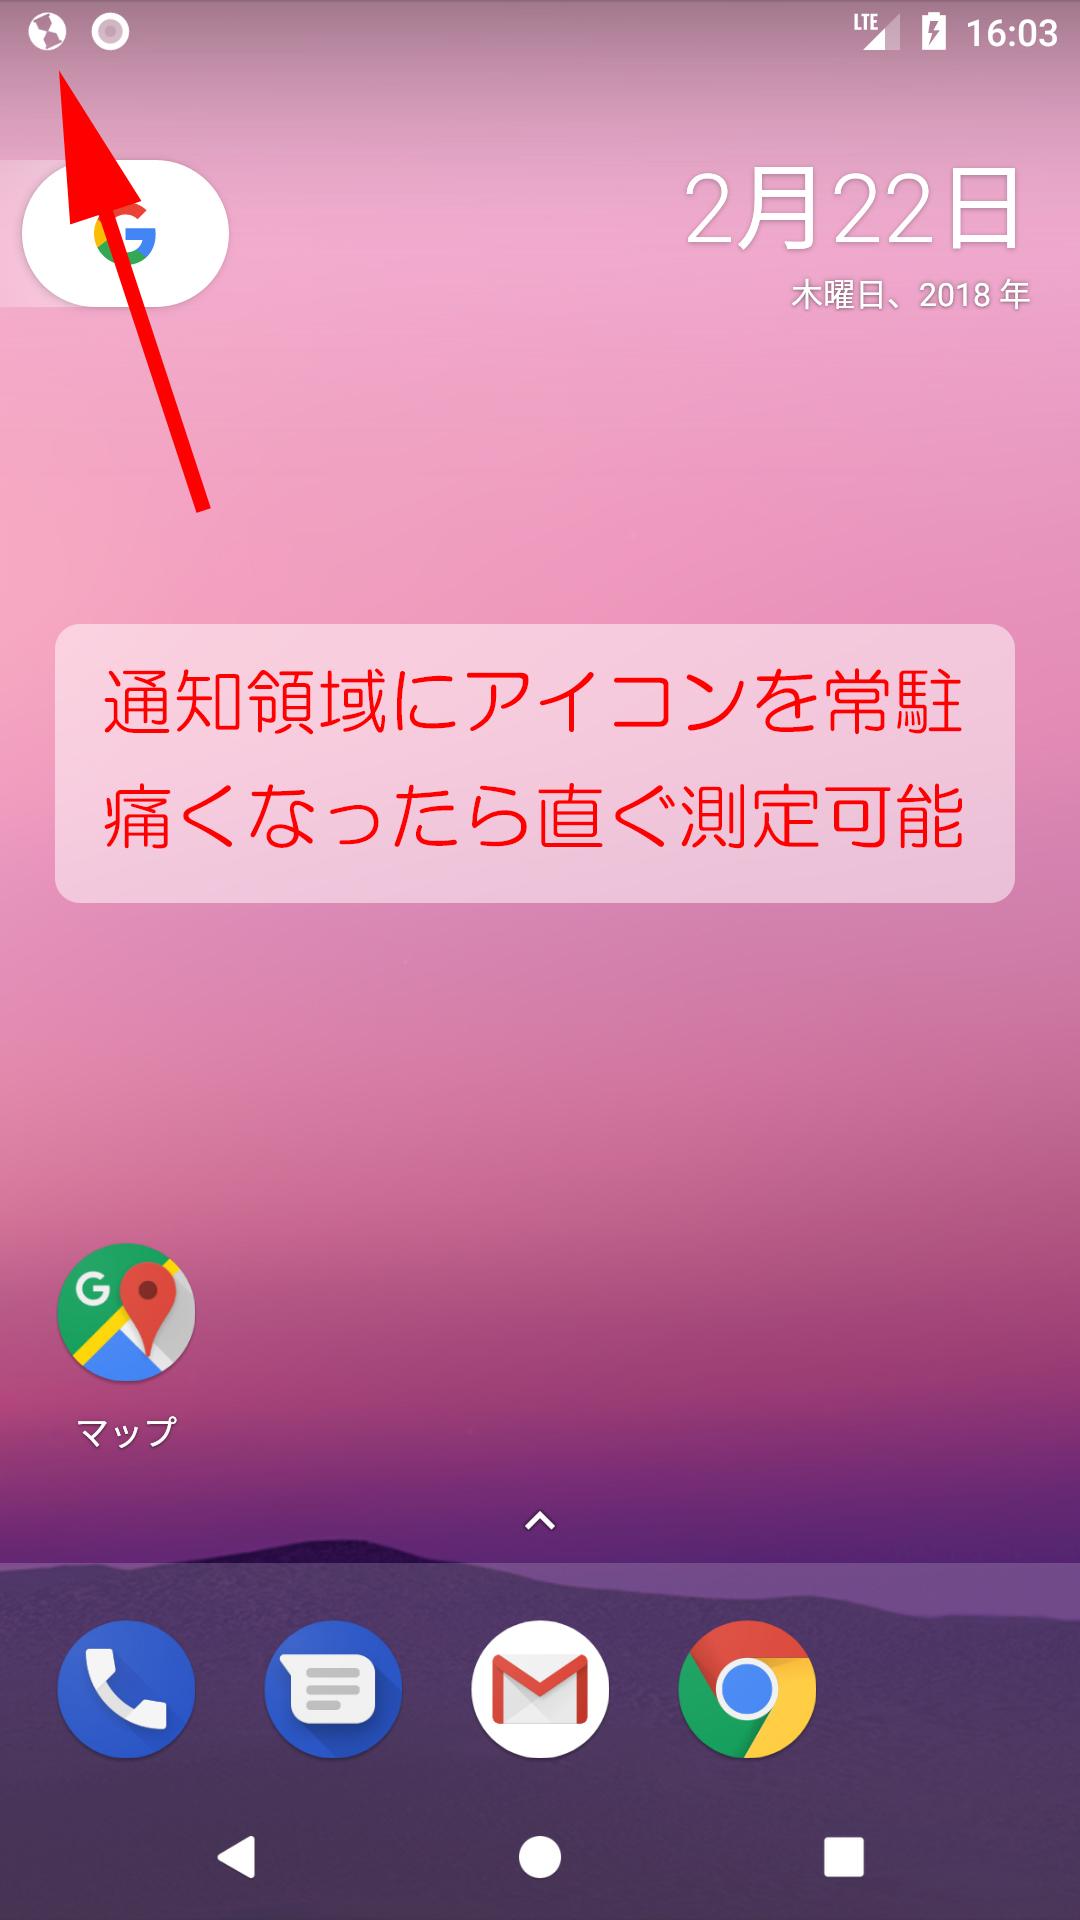 Android application 陣痛／お腹の張りカウンター screenshort